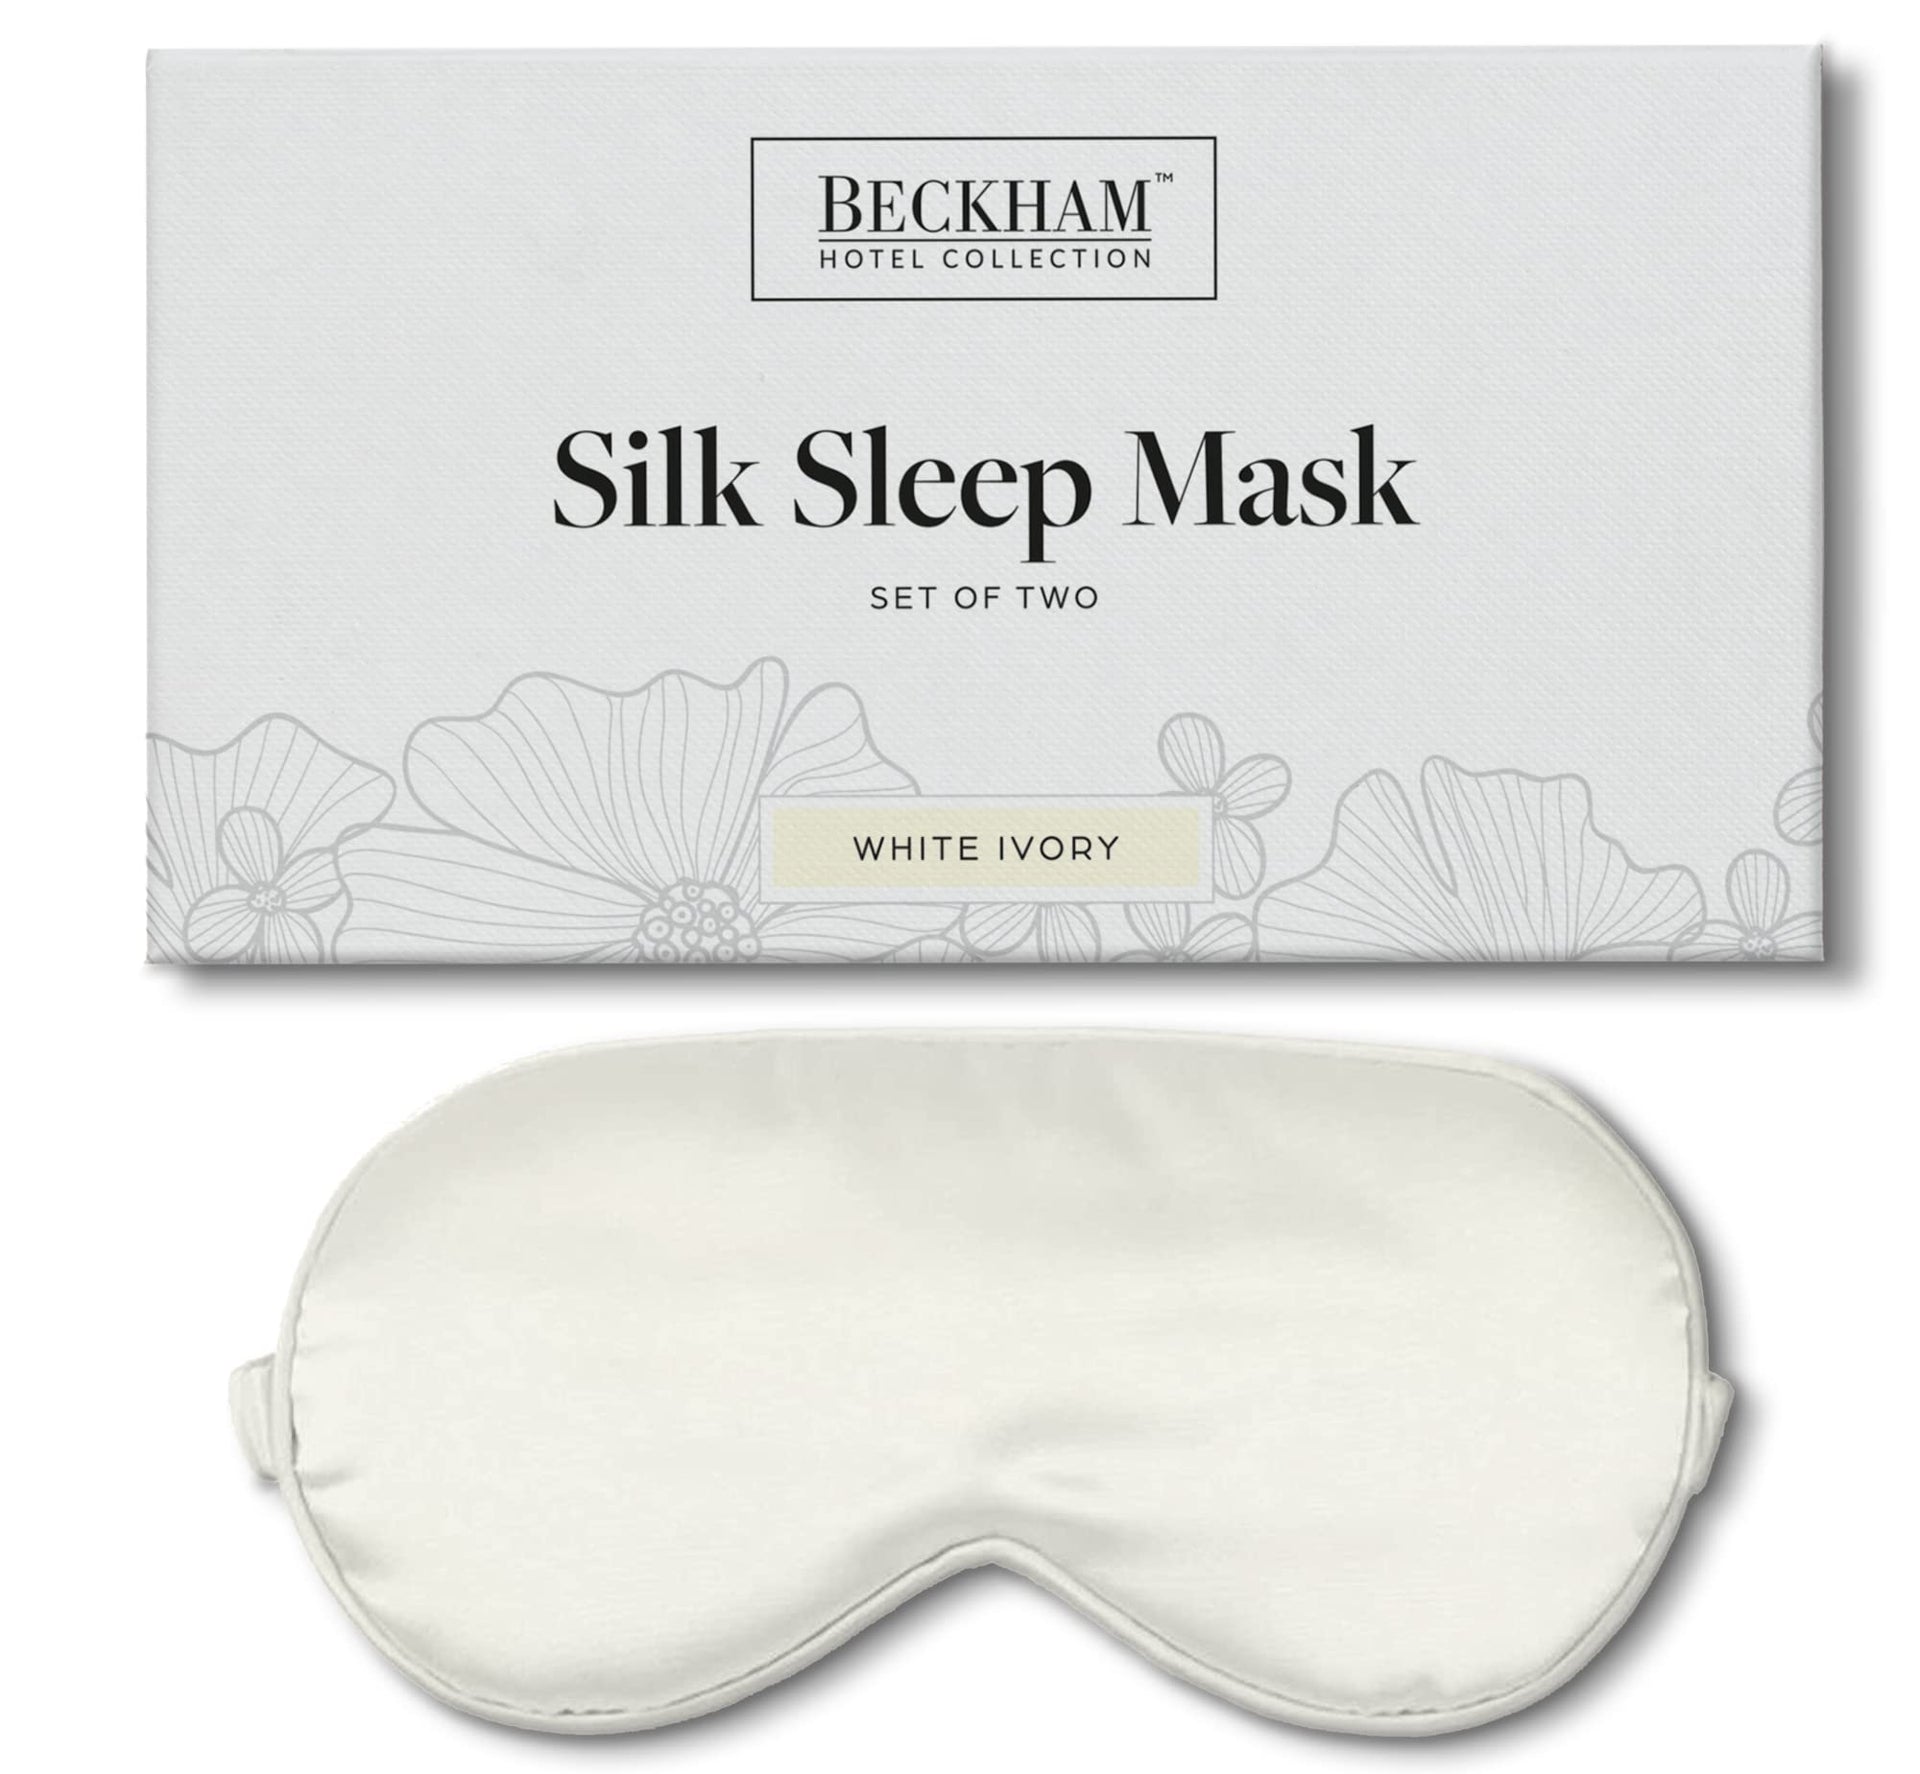 Beckham Hotel Collection Silk Pillowcase - Pack of 2 Standard Size Silk Pillow Cases - White (Queen)